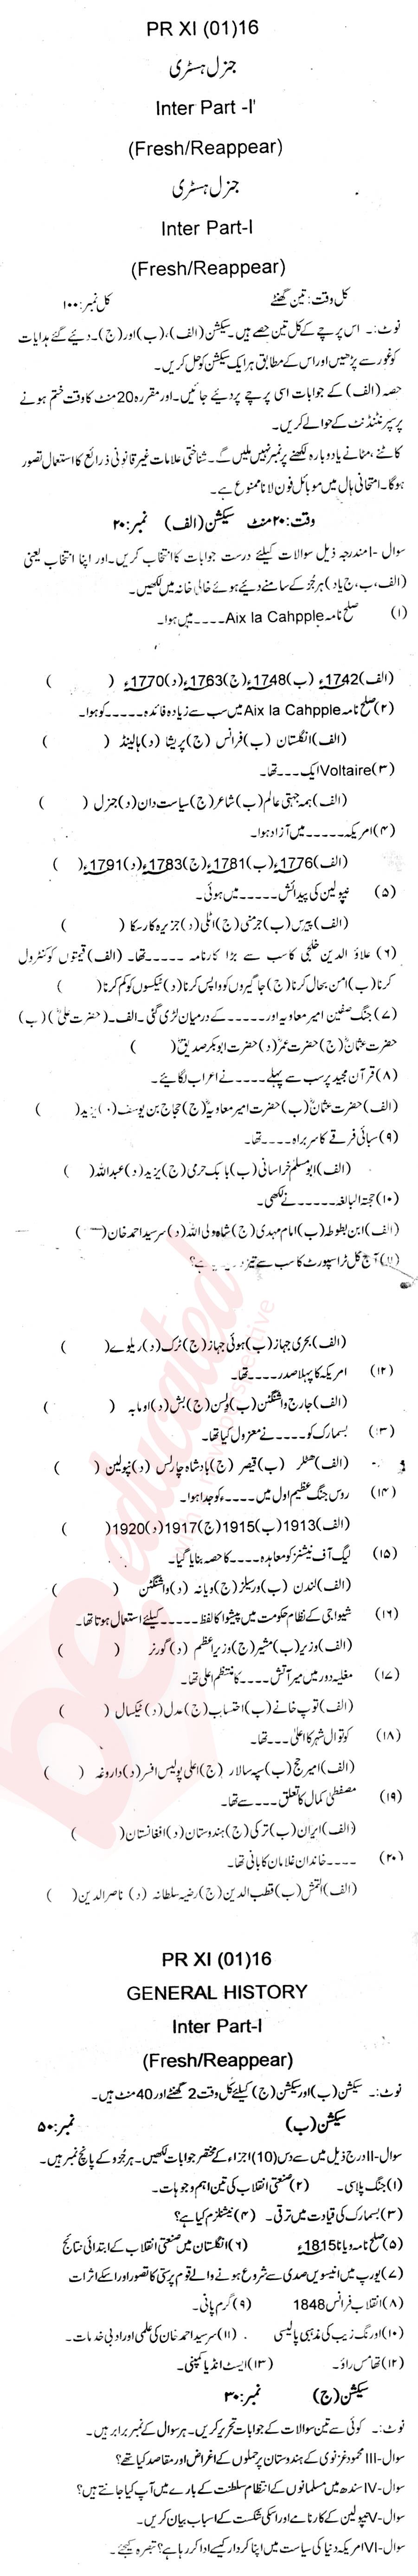 Islamic History FA Part 1 Past Paper Group 1 BISE Peshawar 2016